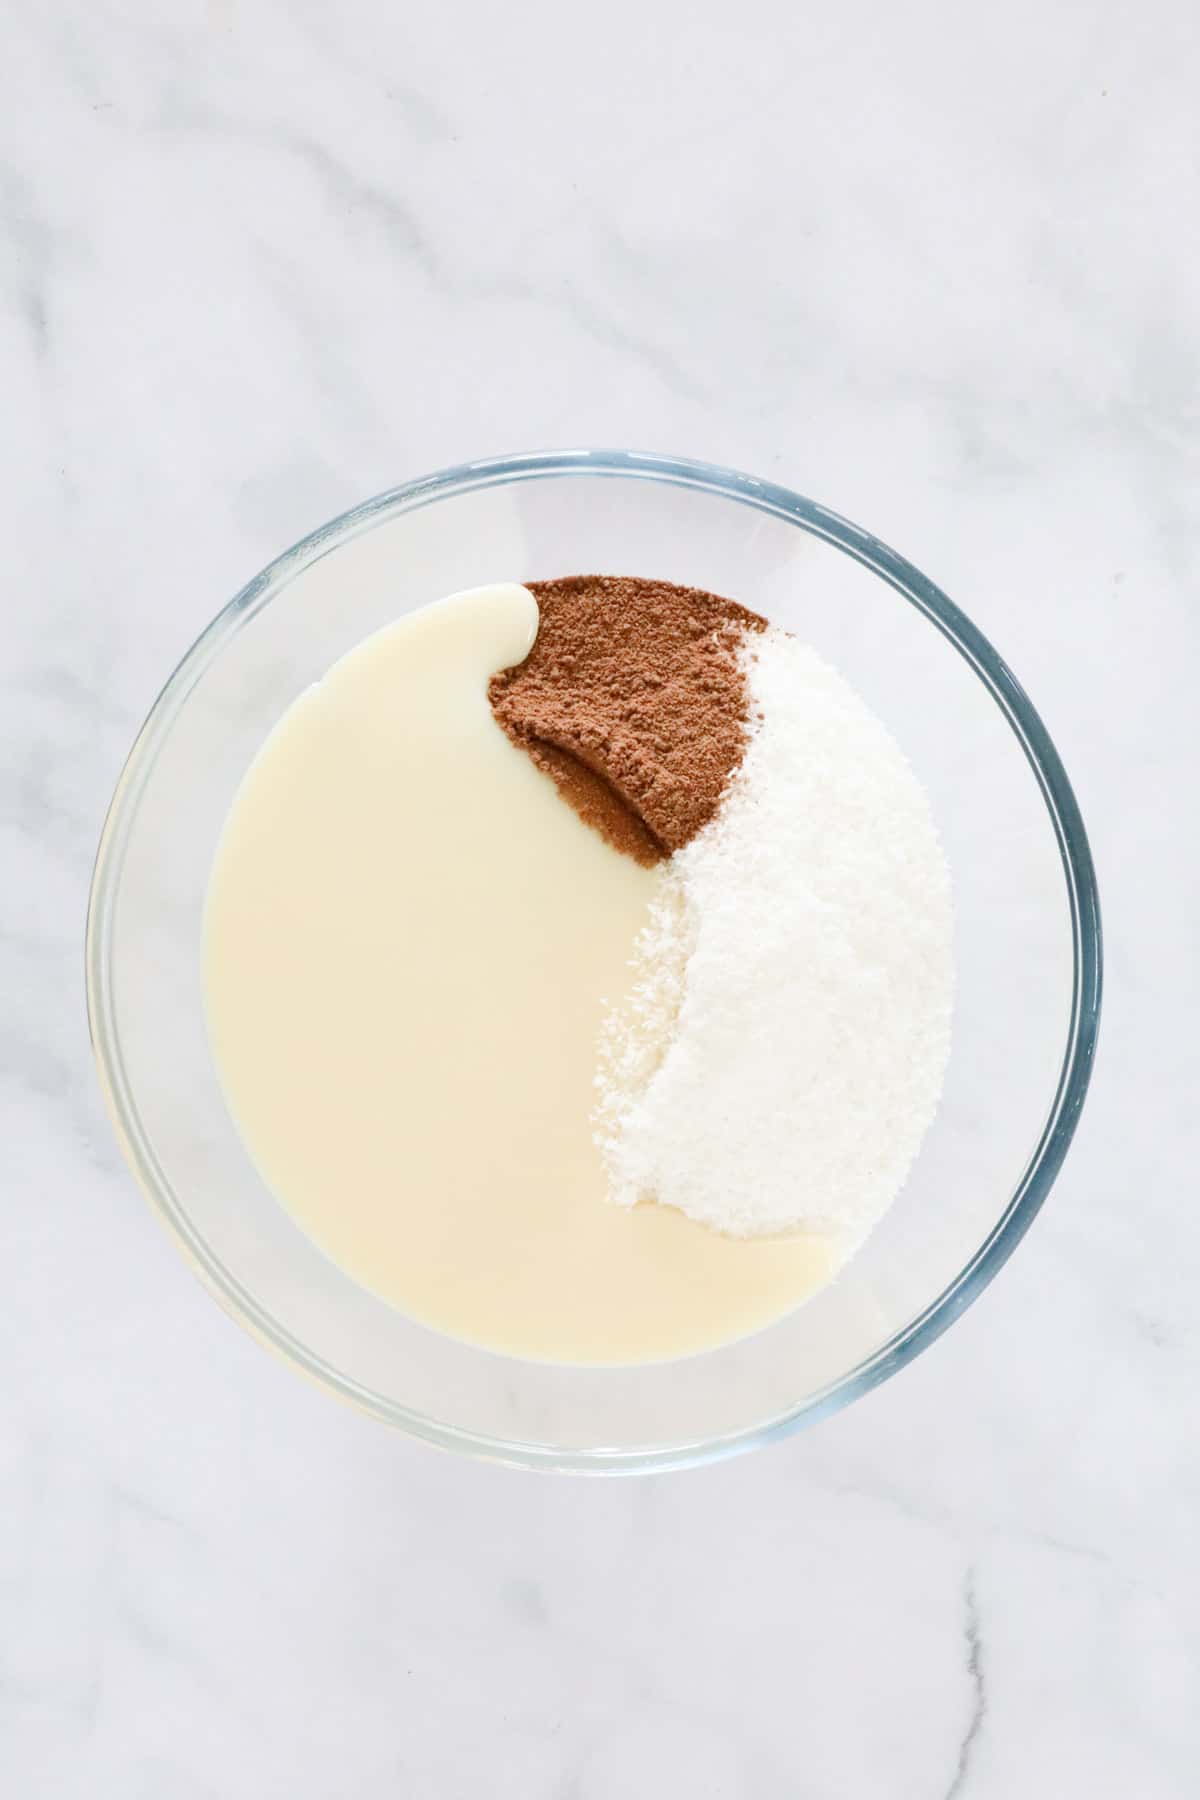 Condensed milk, coconut and milo in a glass bowl.